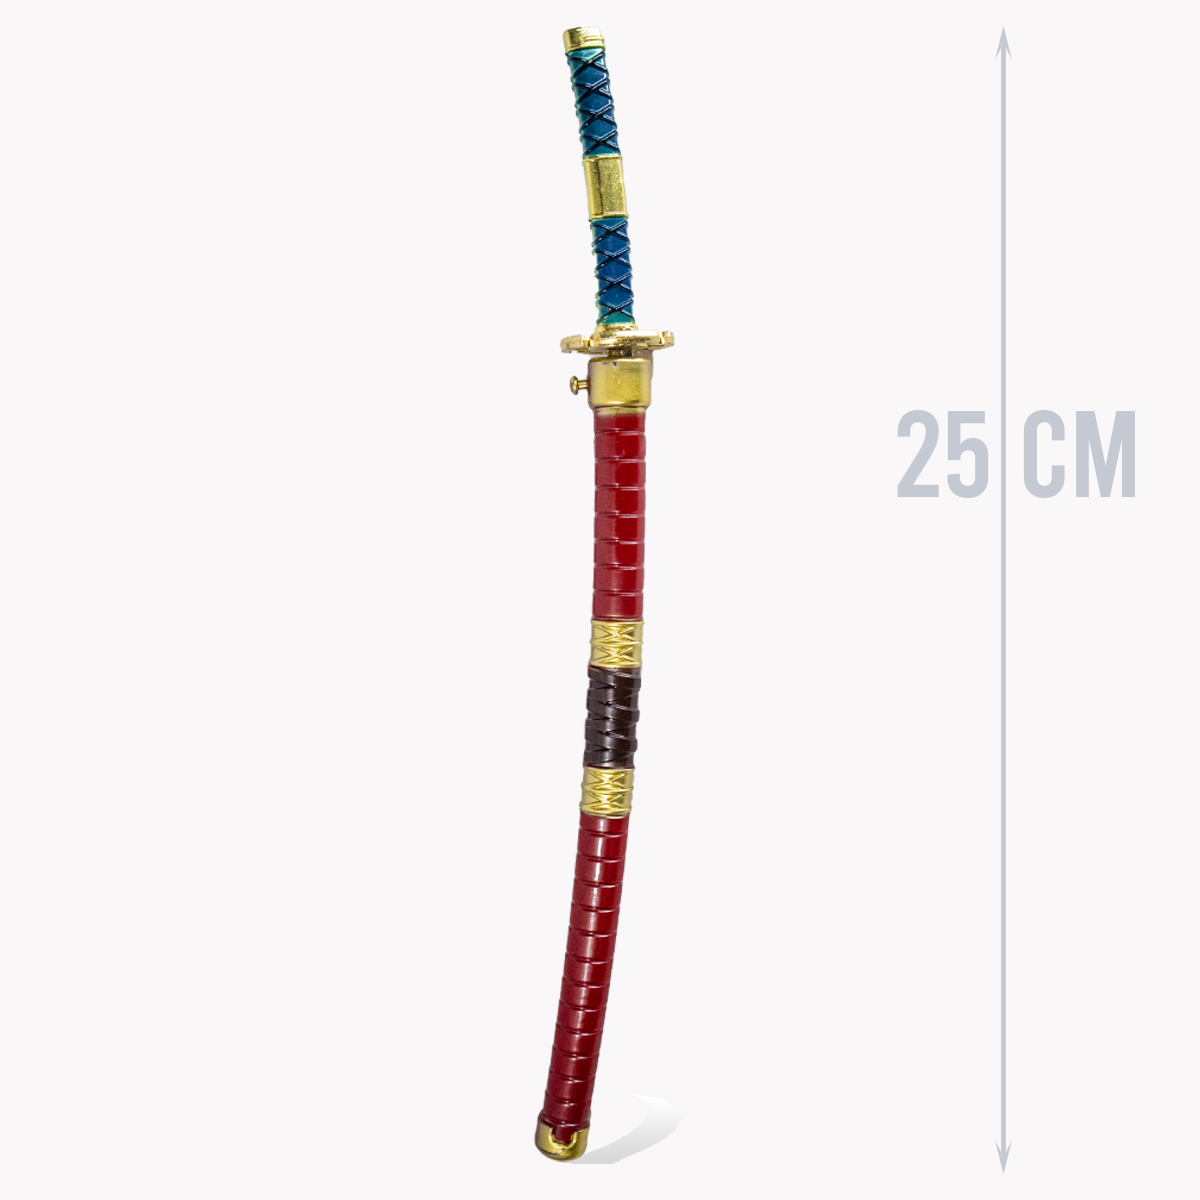 THE ULTIMATE ZORO MINI KATANA COLLECTION OF ZORO'S 4 SWORDS - Sandai Kitetsu 25 cm